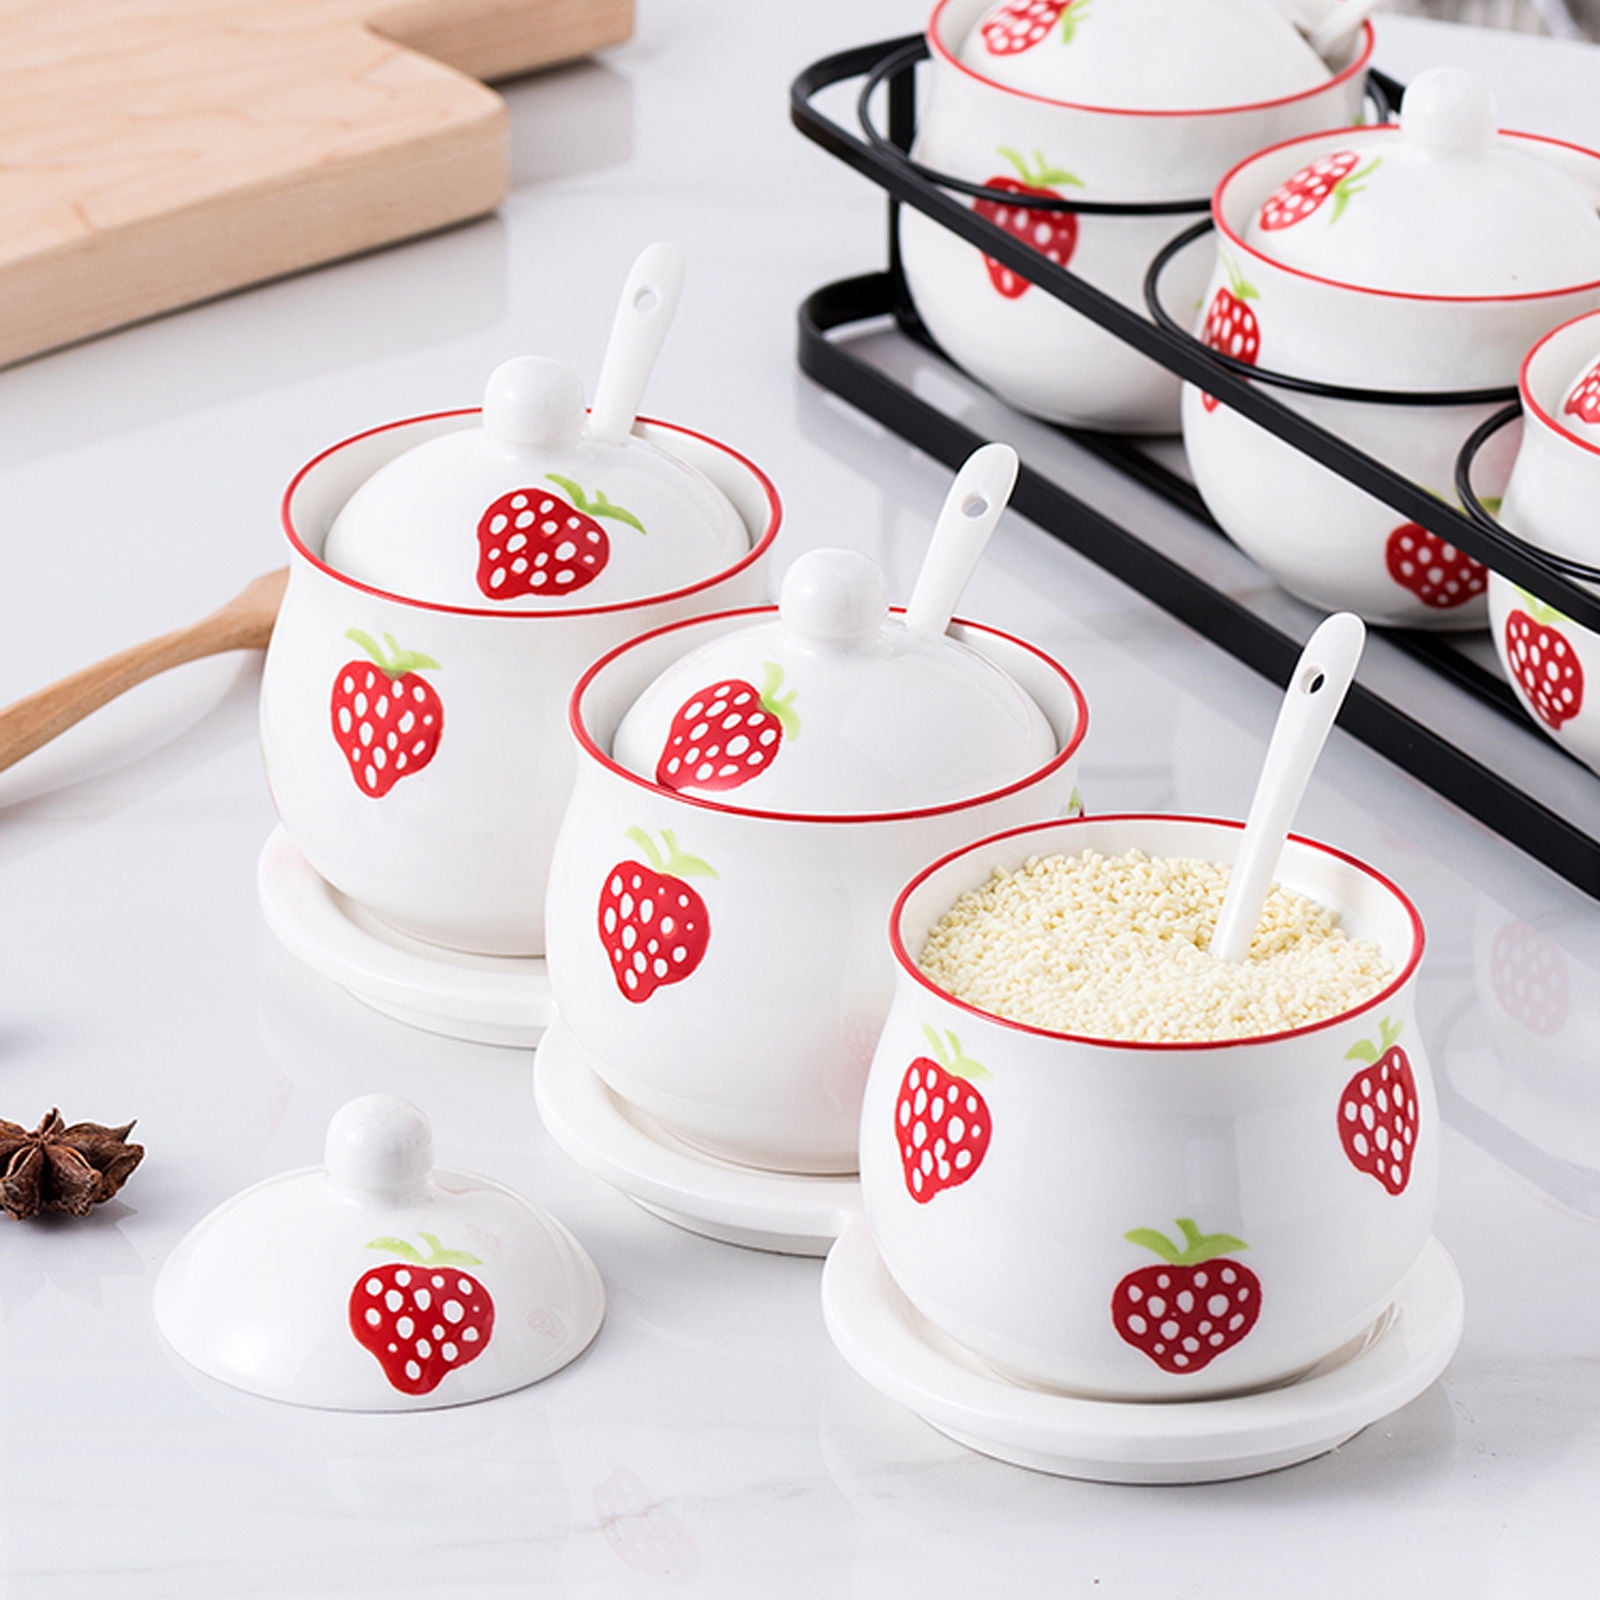 Cute 3pcs Strawberry Ceramic Food Soup Rice Bowl Storage Containers Set  w/lids